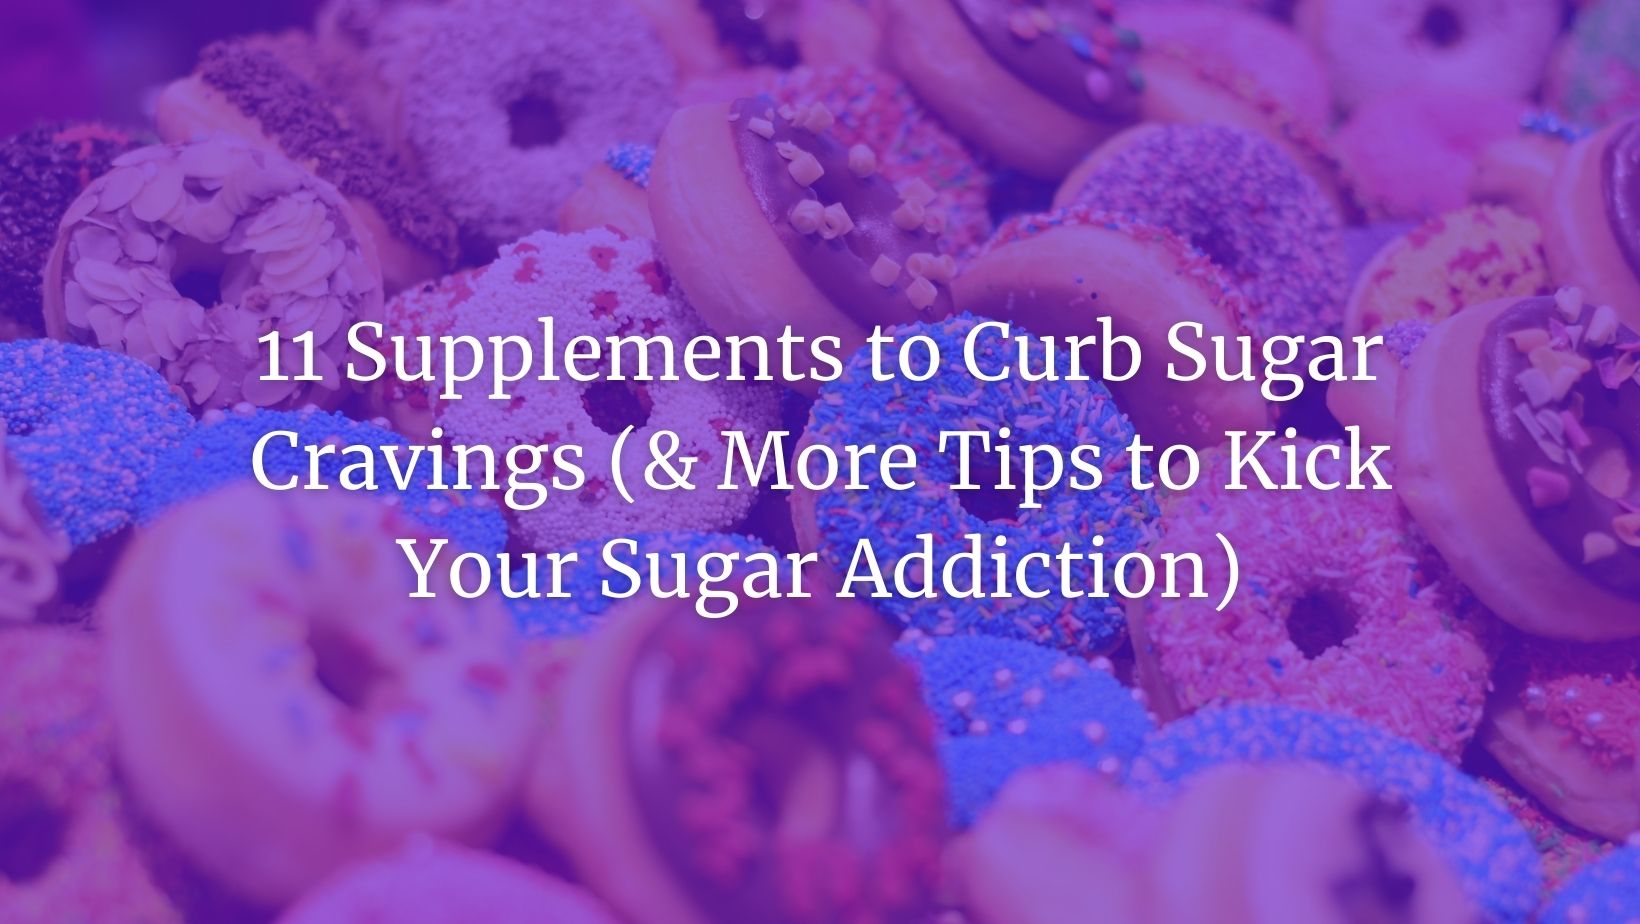 sugar addiction supplements feature